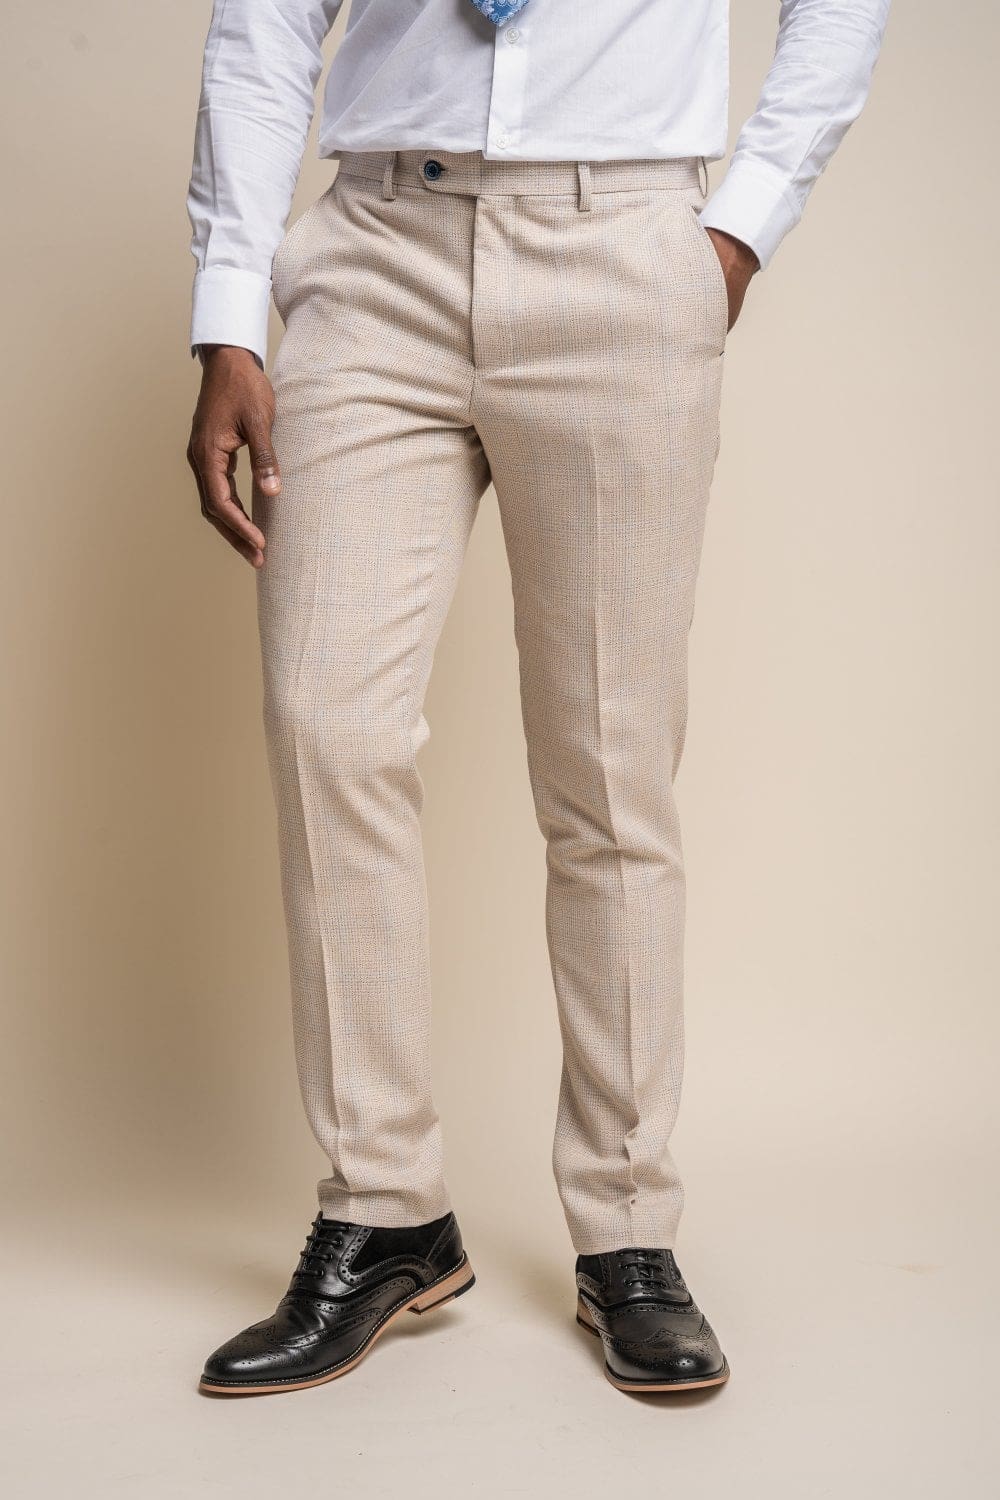 Buy MALENO Slim Fit Men Solid Textured Cream Trouser at Amazonin